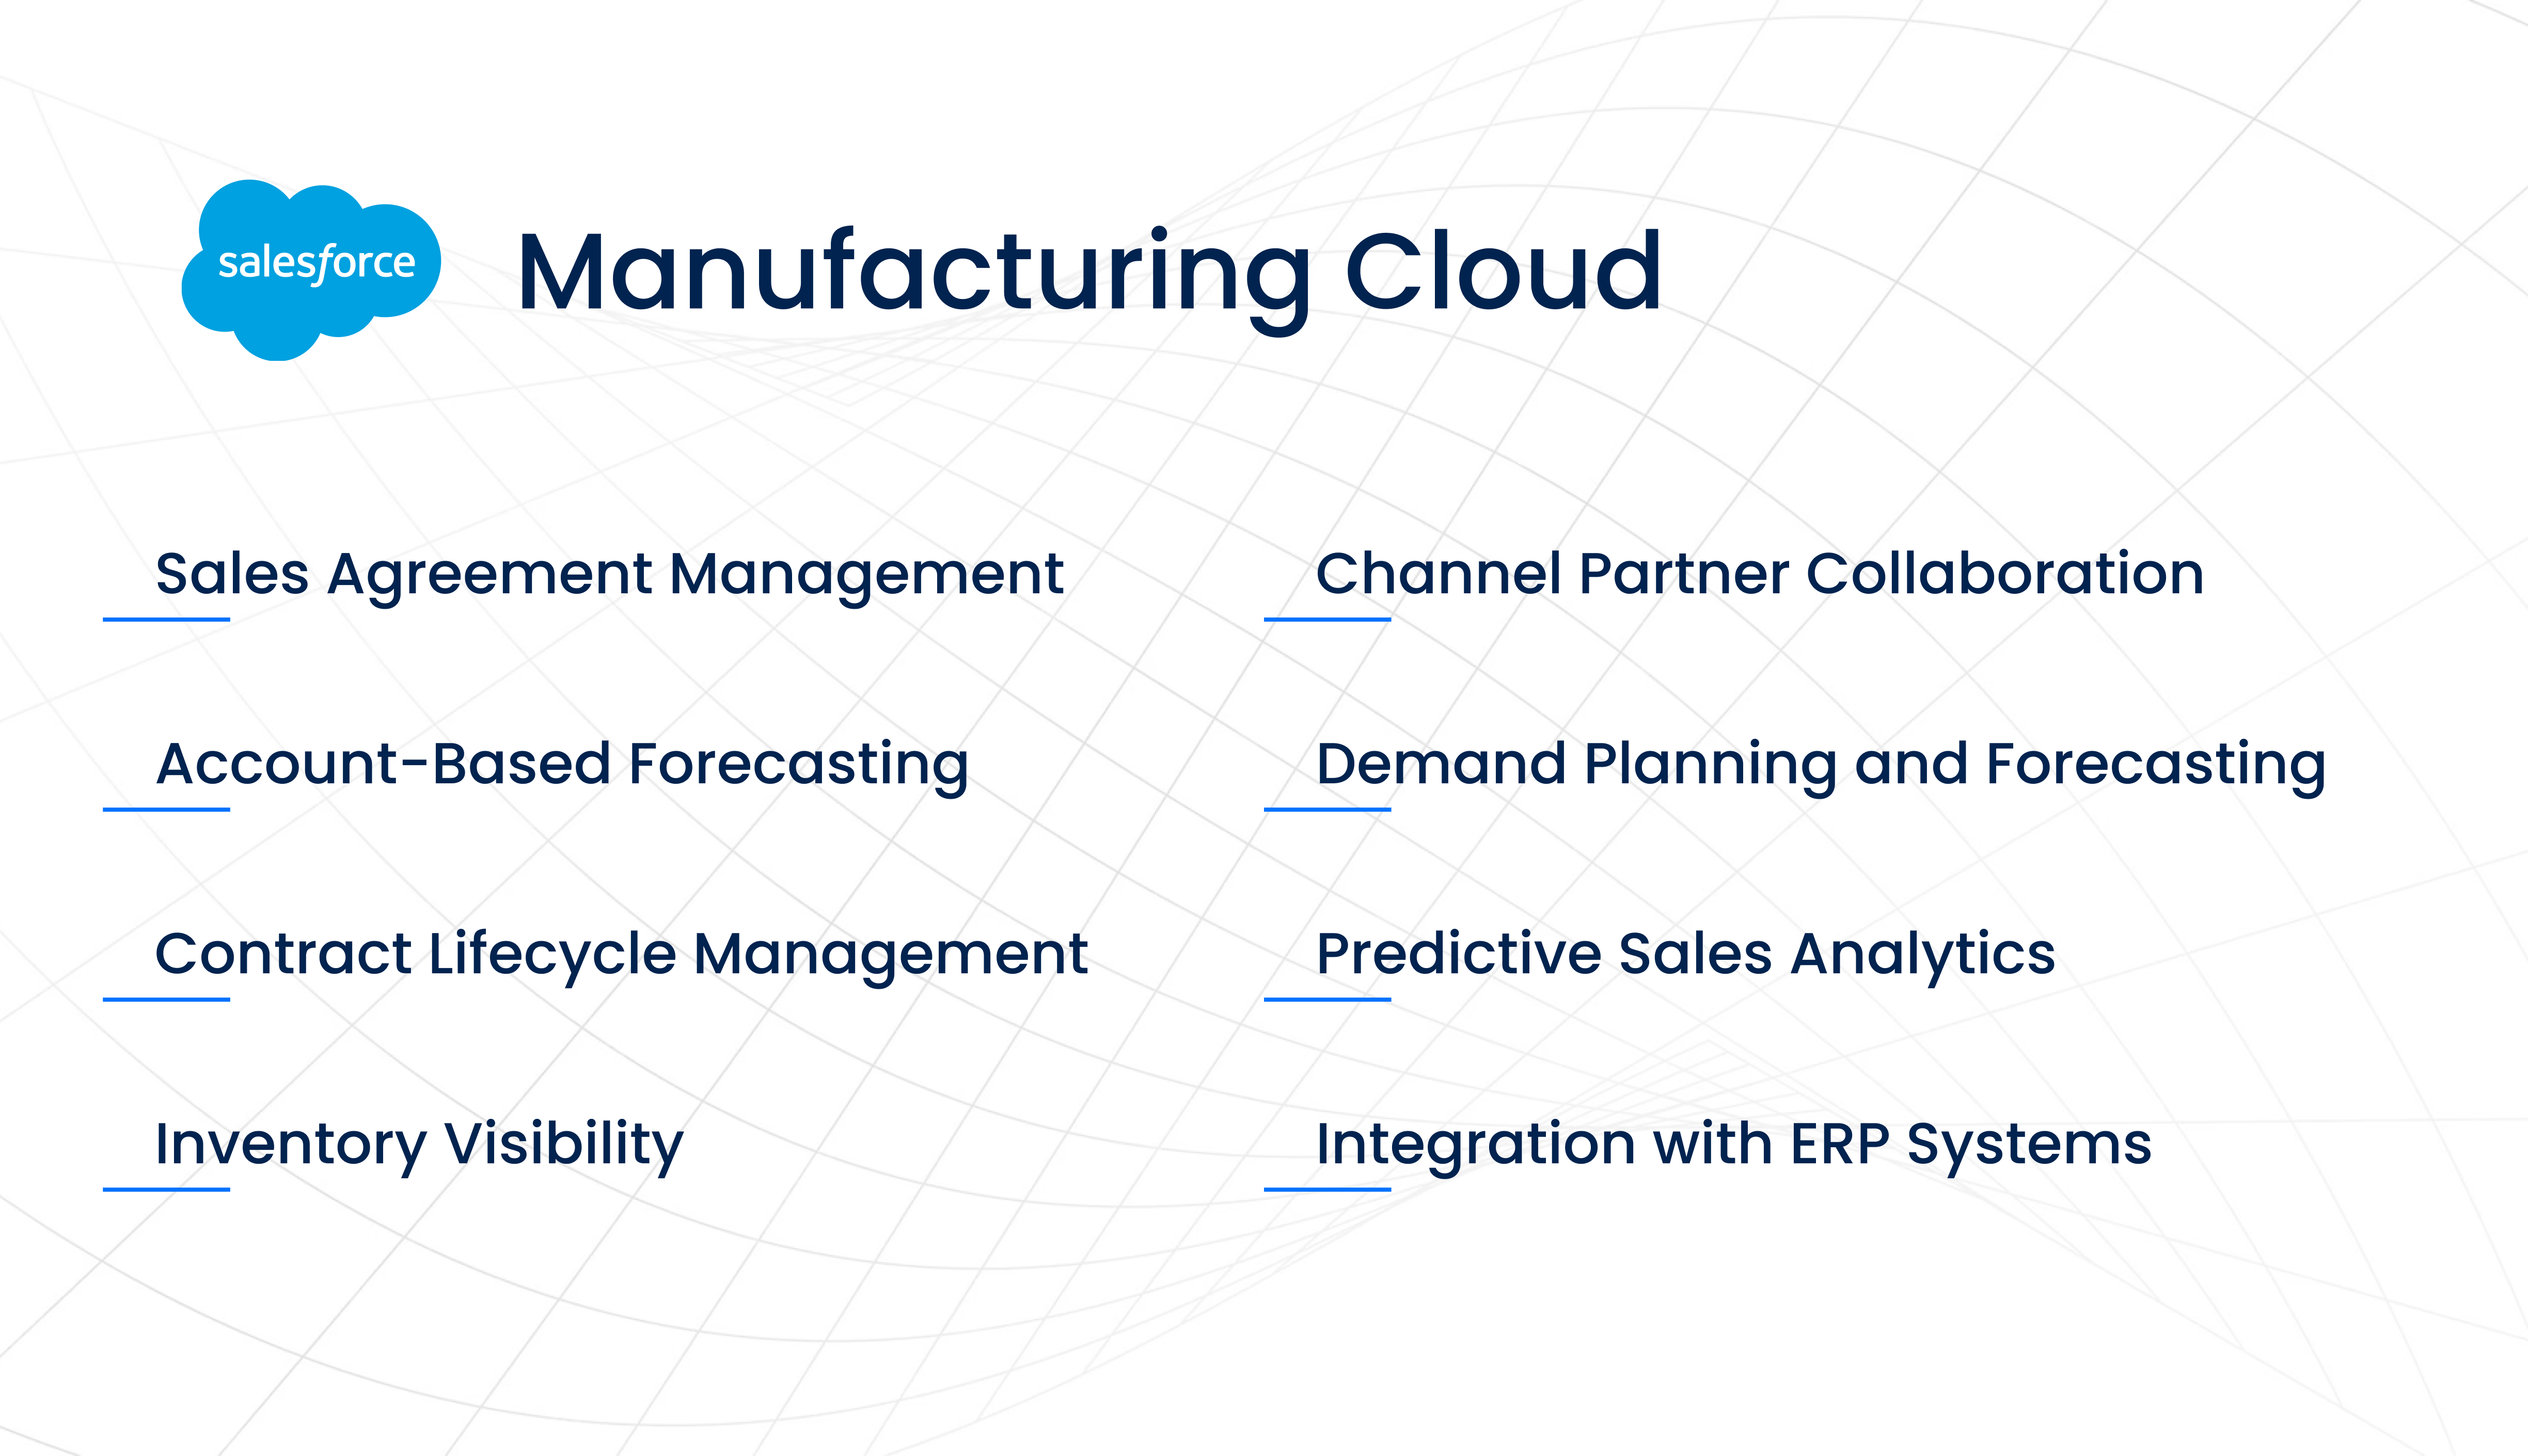 salesforce manufacturing cloud